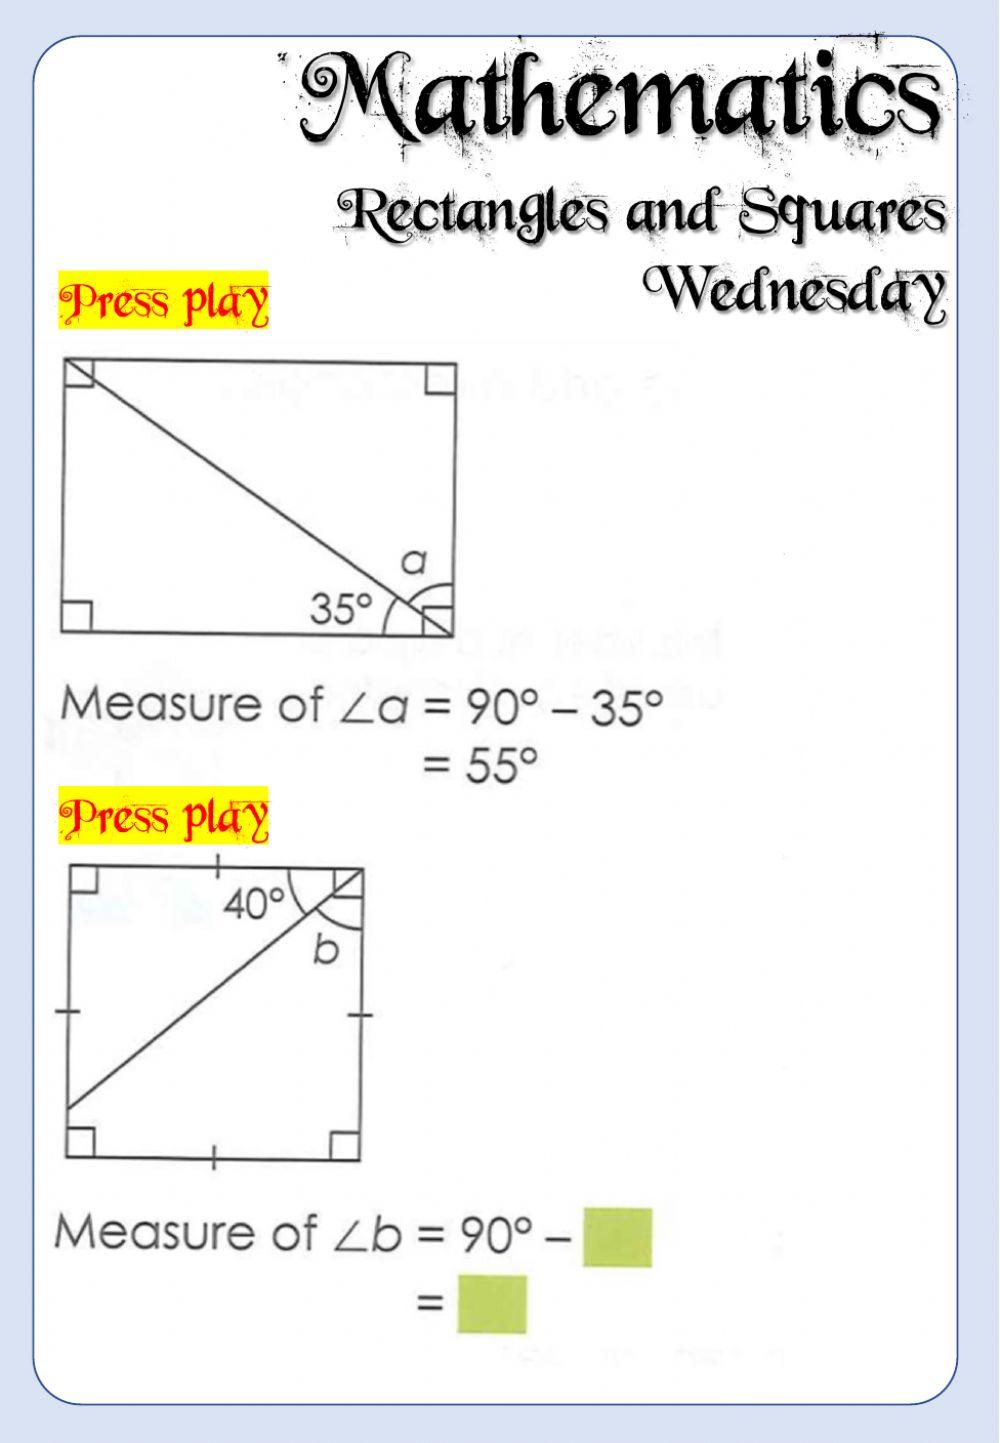 Week 18 - Mathematics - Wednesday